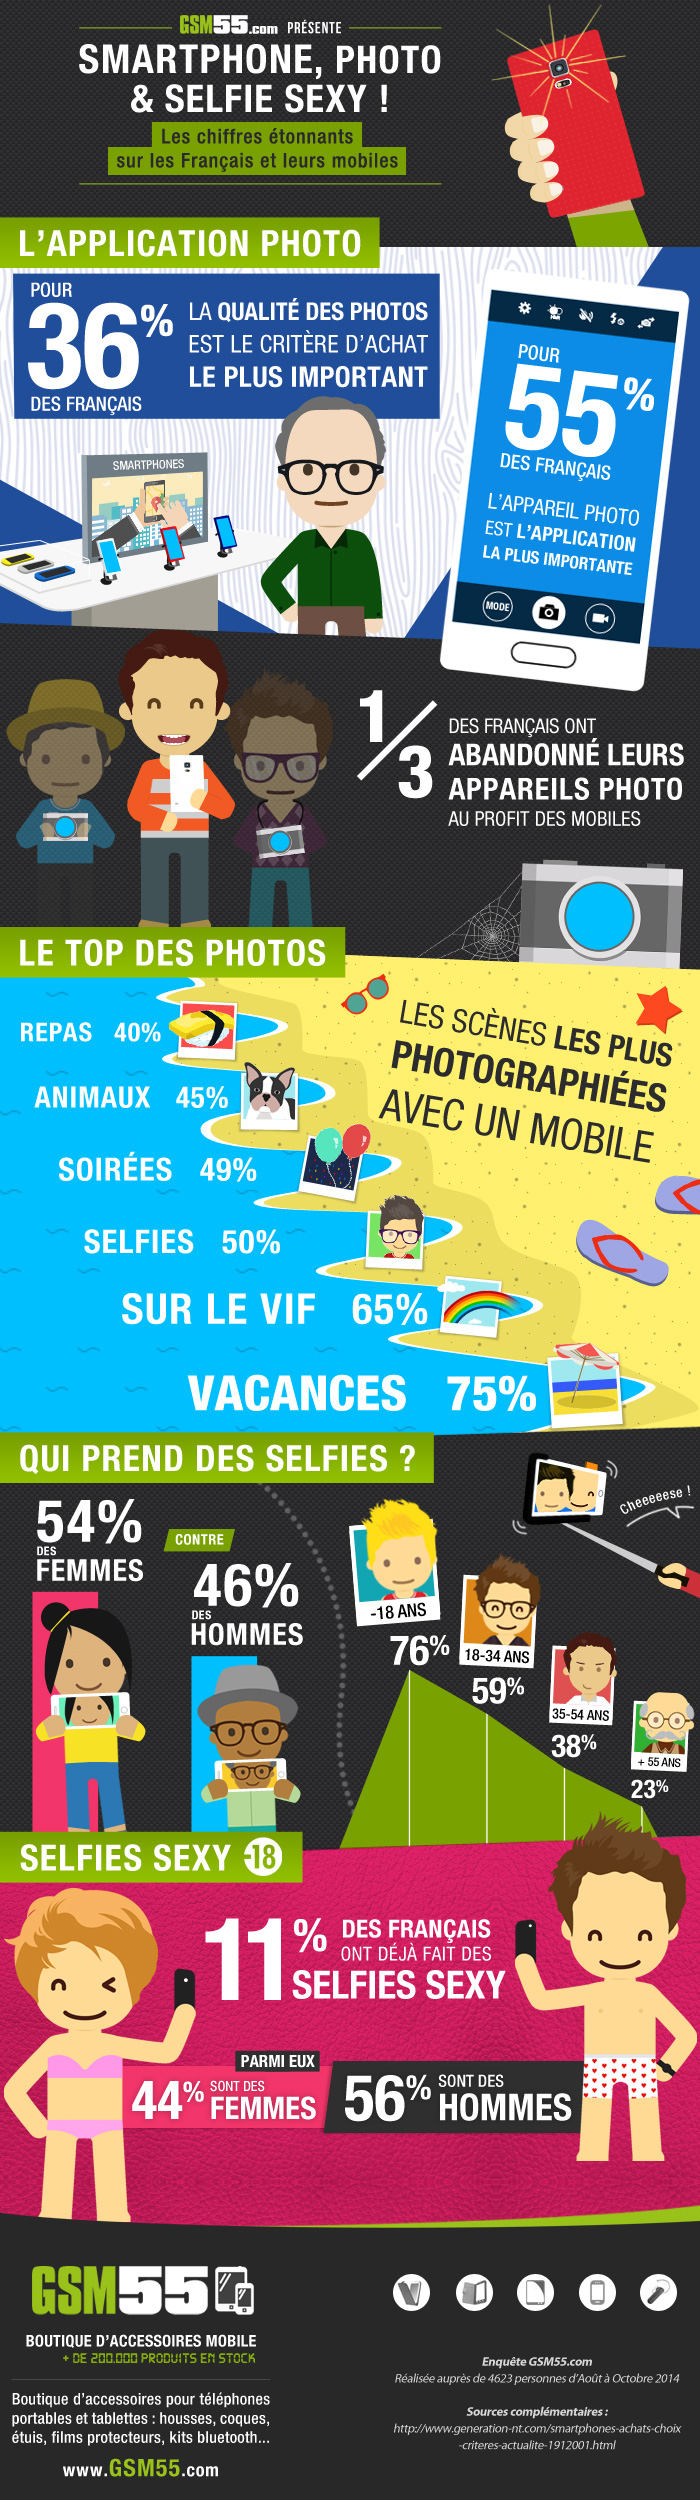 Infographie-smartphone-photo-selfie-sexy